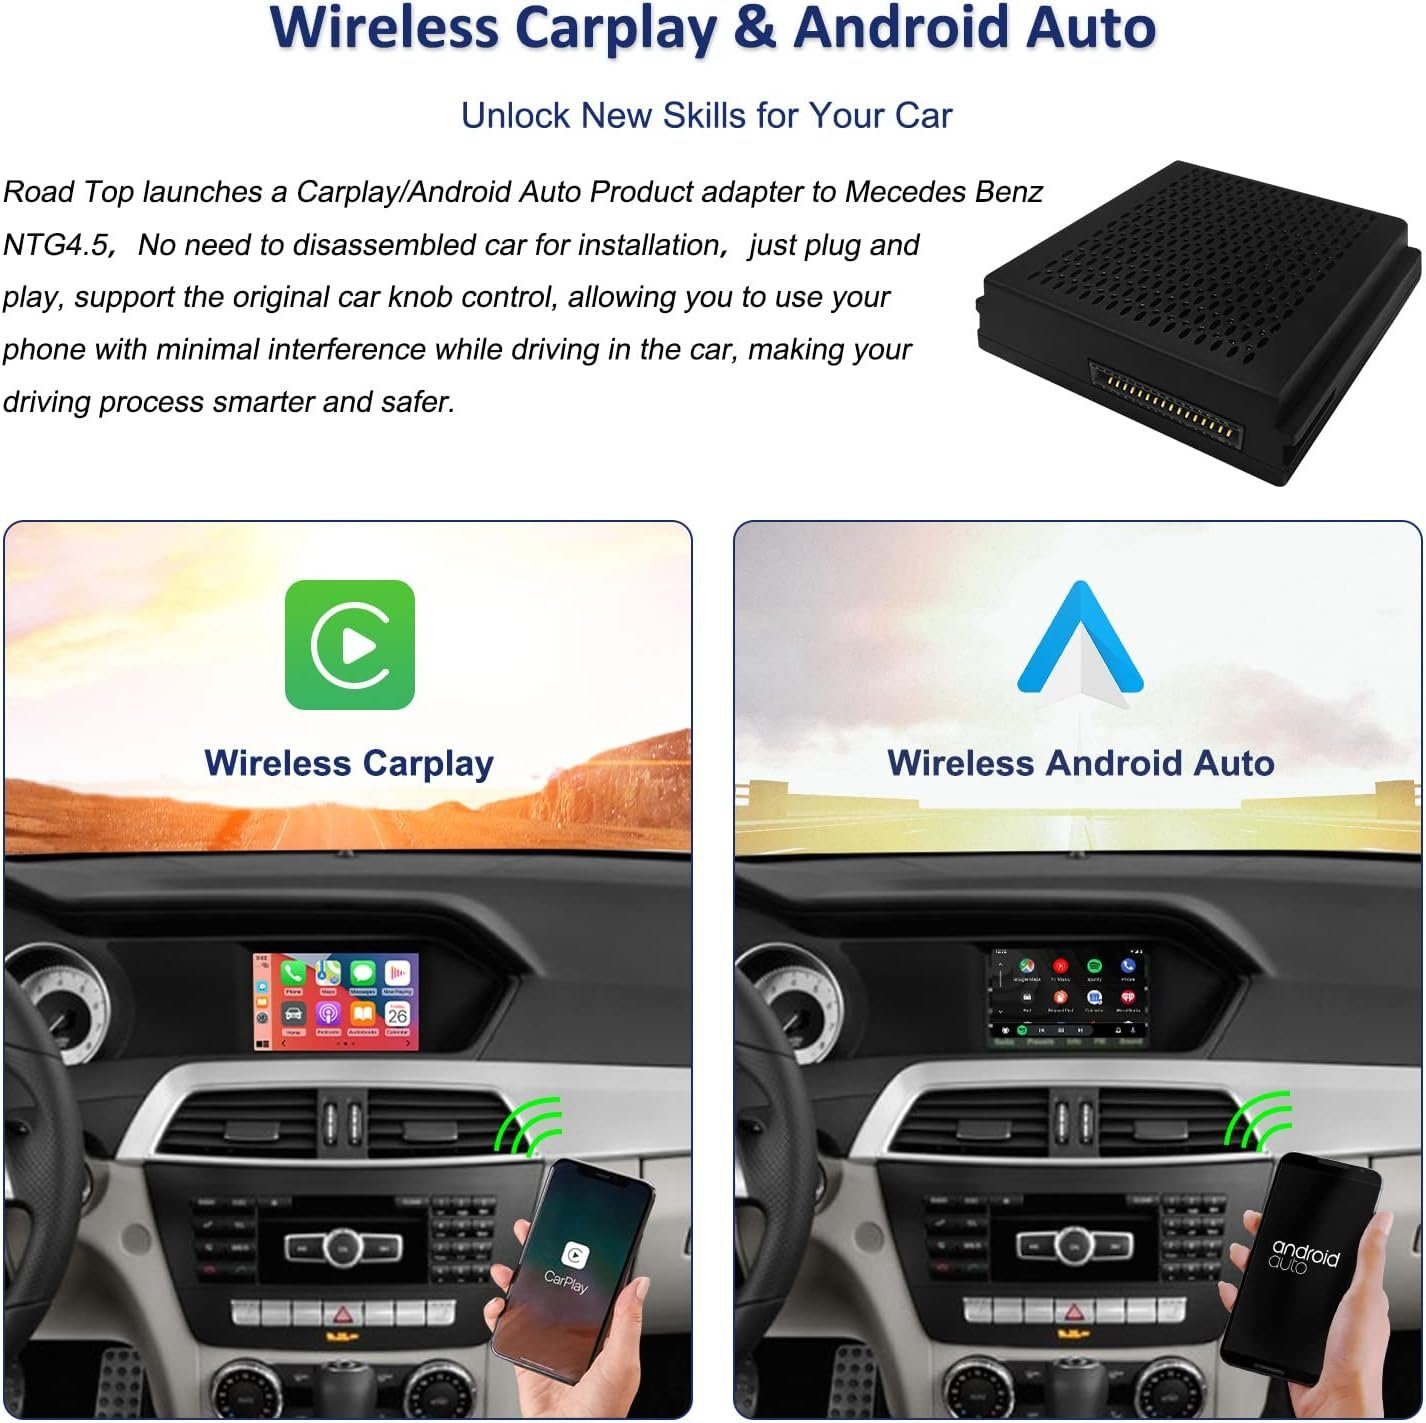 Benz A Mercedes ML E Drahtlos C CarPlay Für CLA B GLK GABITECH Android SLK Auto Einbau-Navigationsgerät